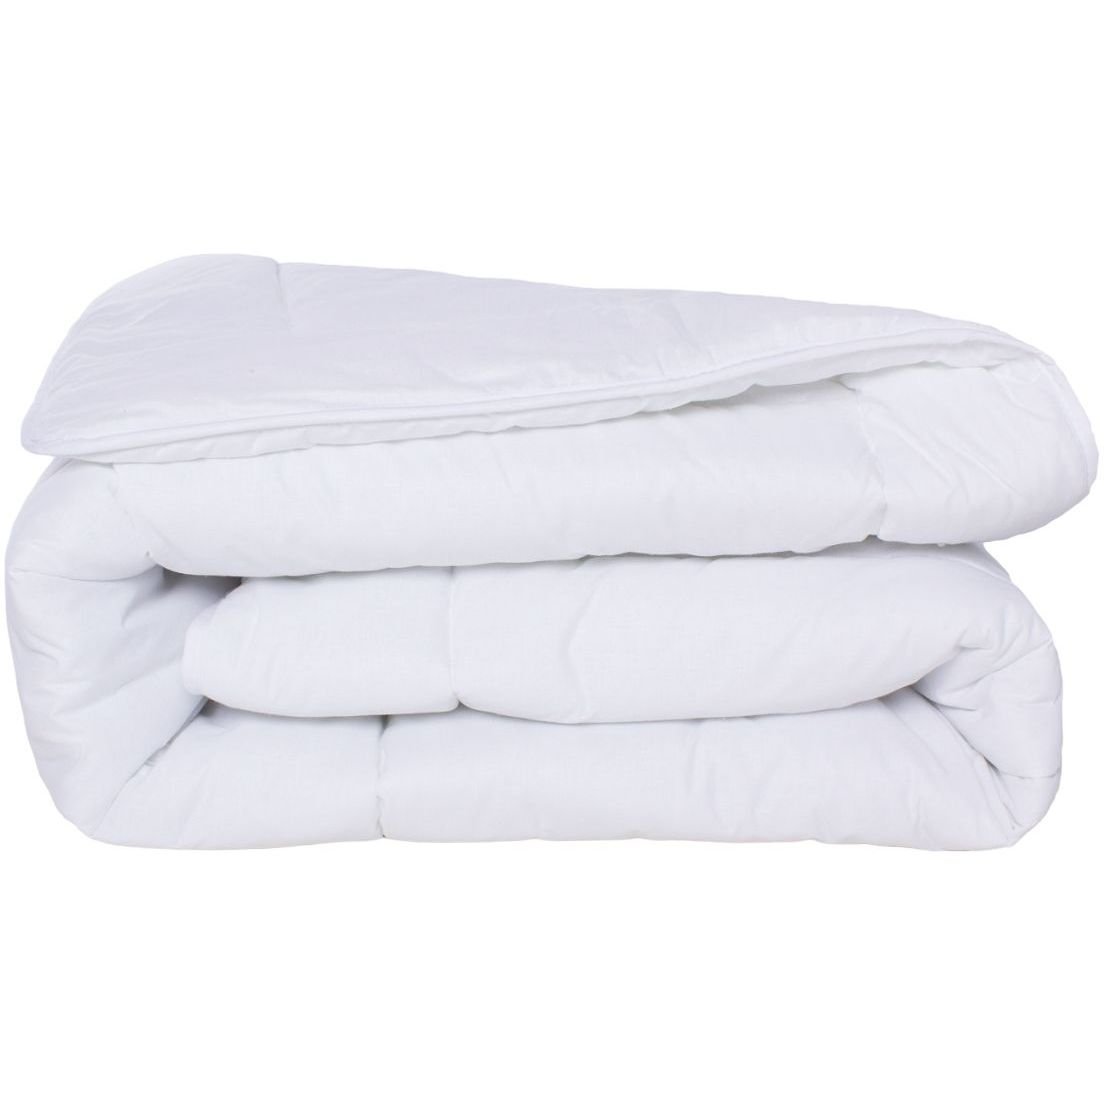 Одеяло шерстяное MirSon Bianco Экстра Премиум №0786, демисезонное, 140x205 см, белое - фото 1